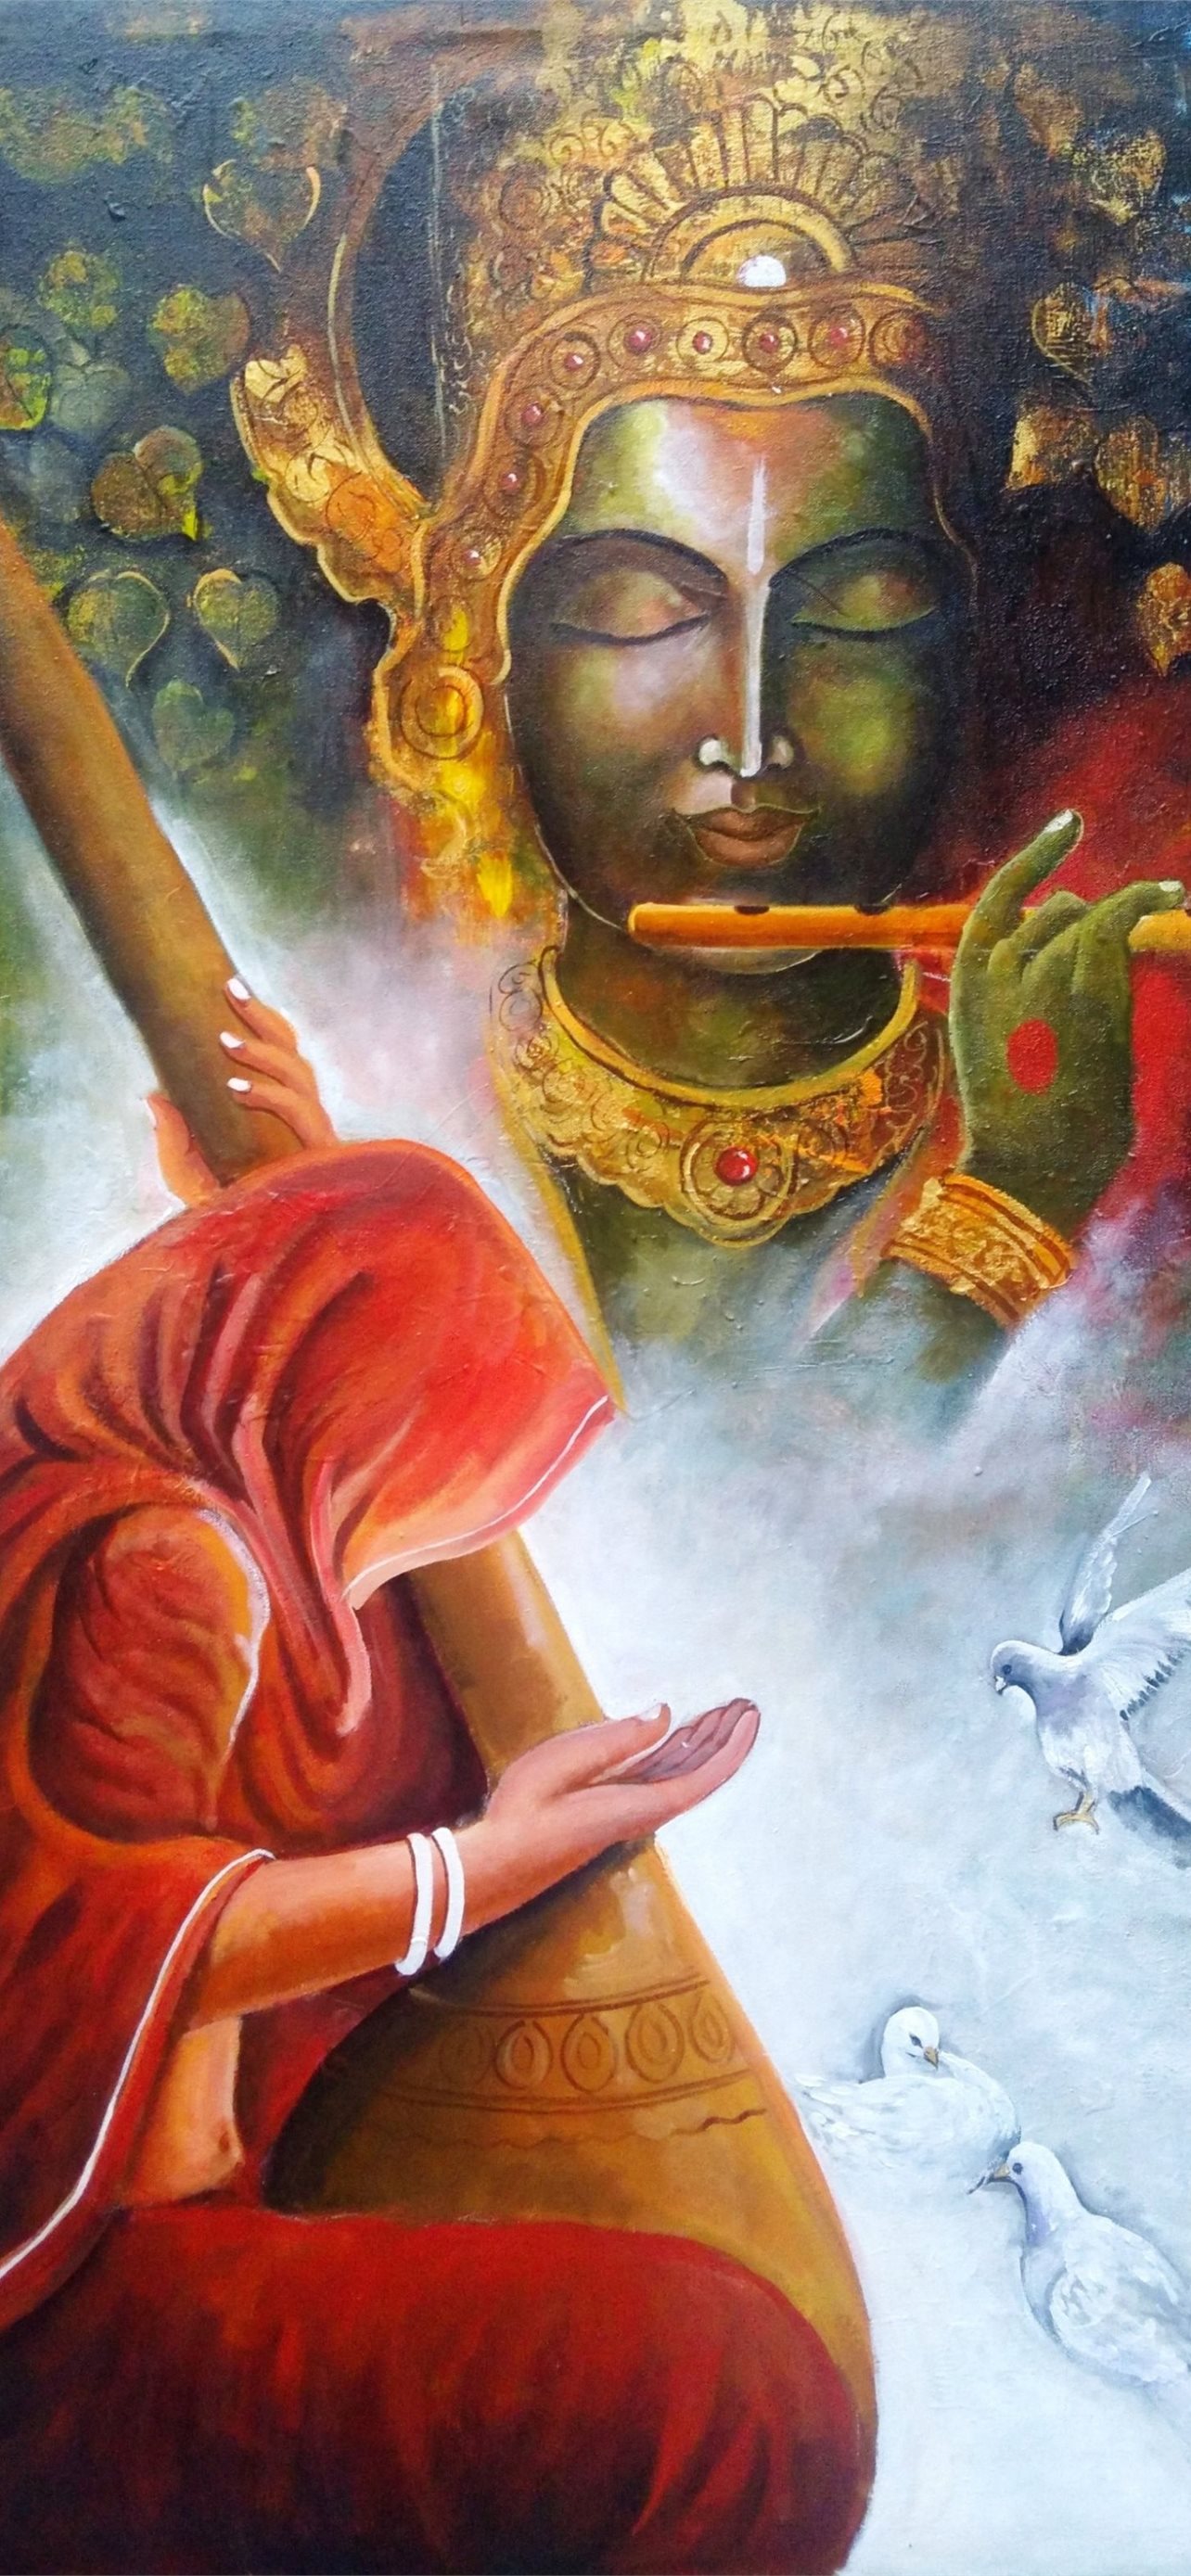 Painting Krishna God Image top iPhone wallpaper 